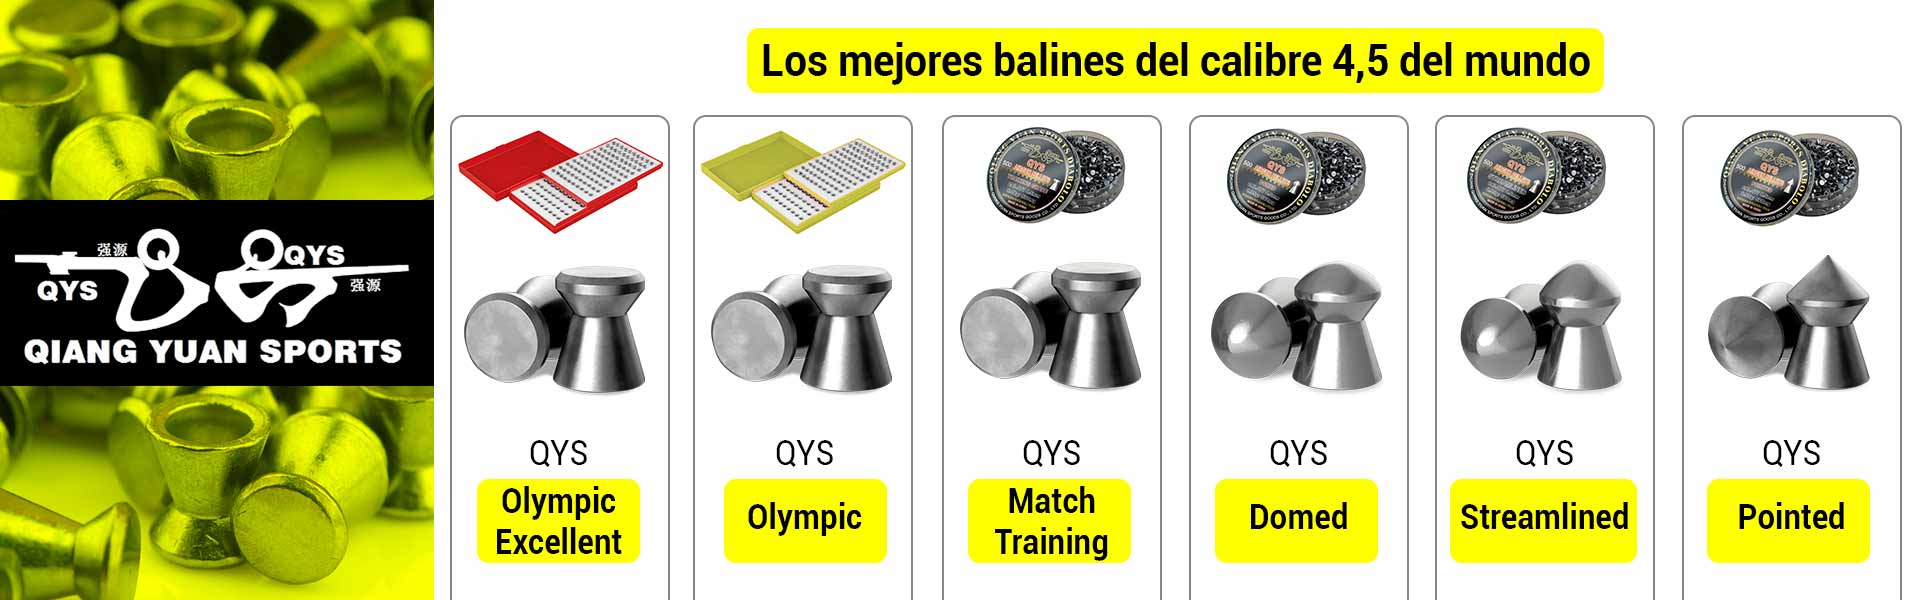 balines-QYS-banner-web-2-2-2